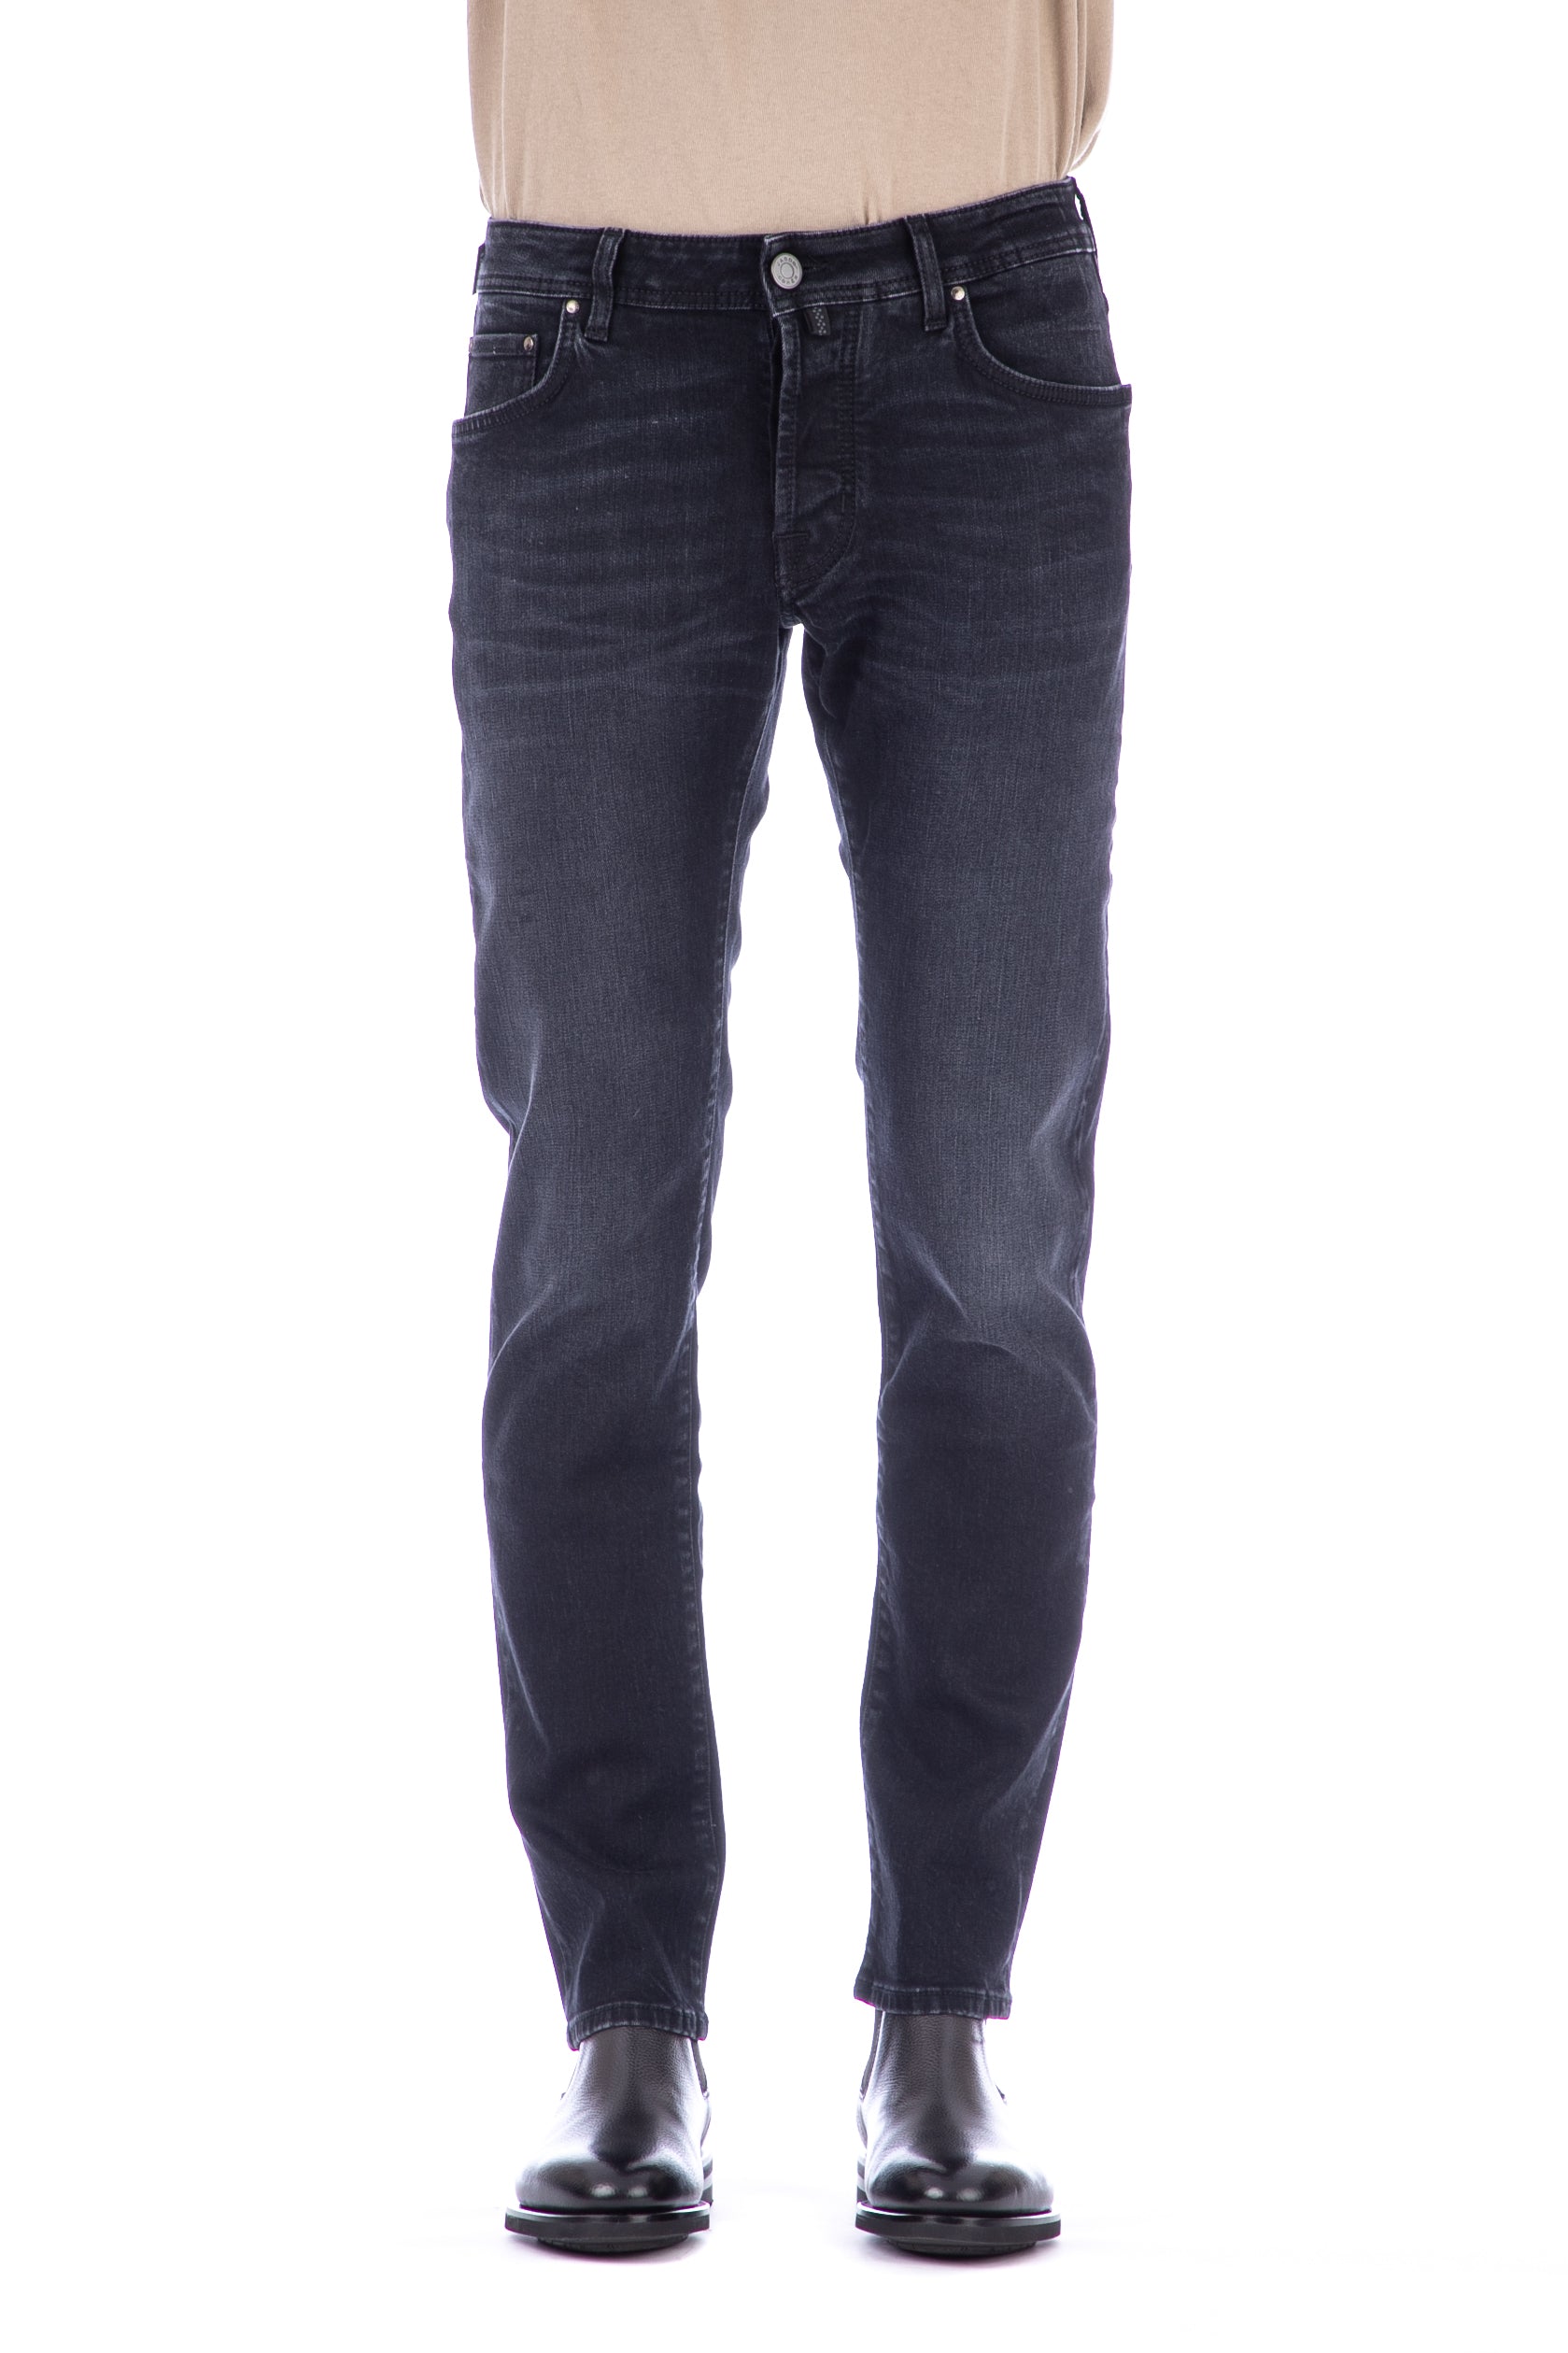 Black slim fit nickel cotton-modal jeans